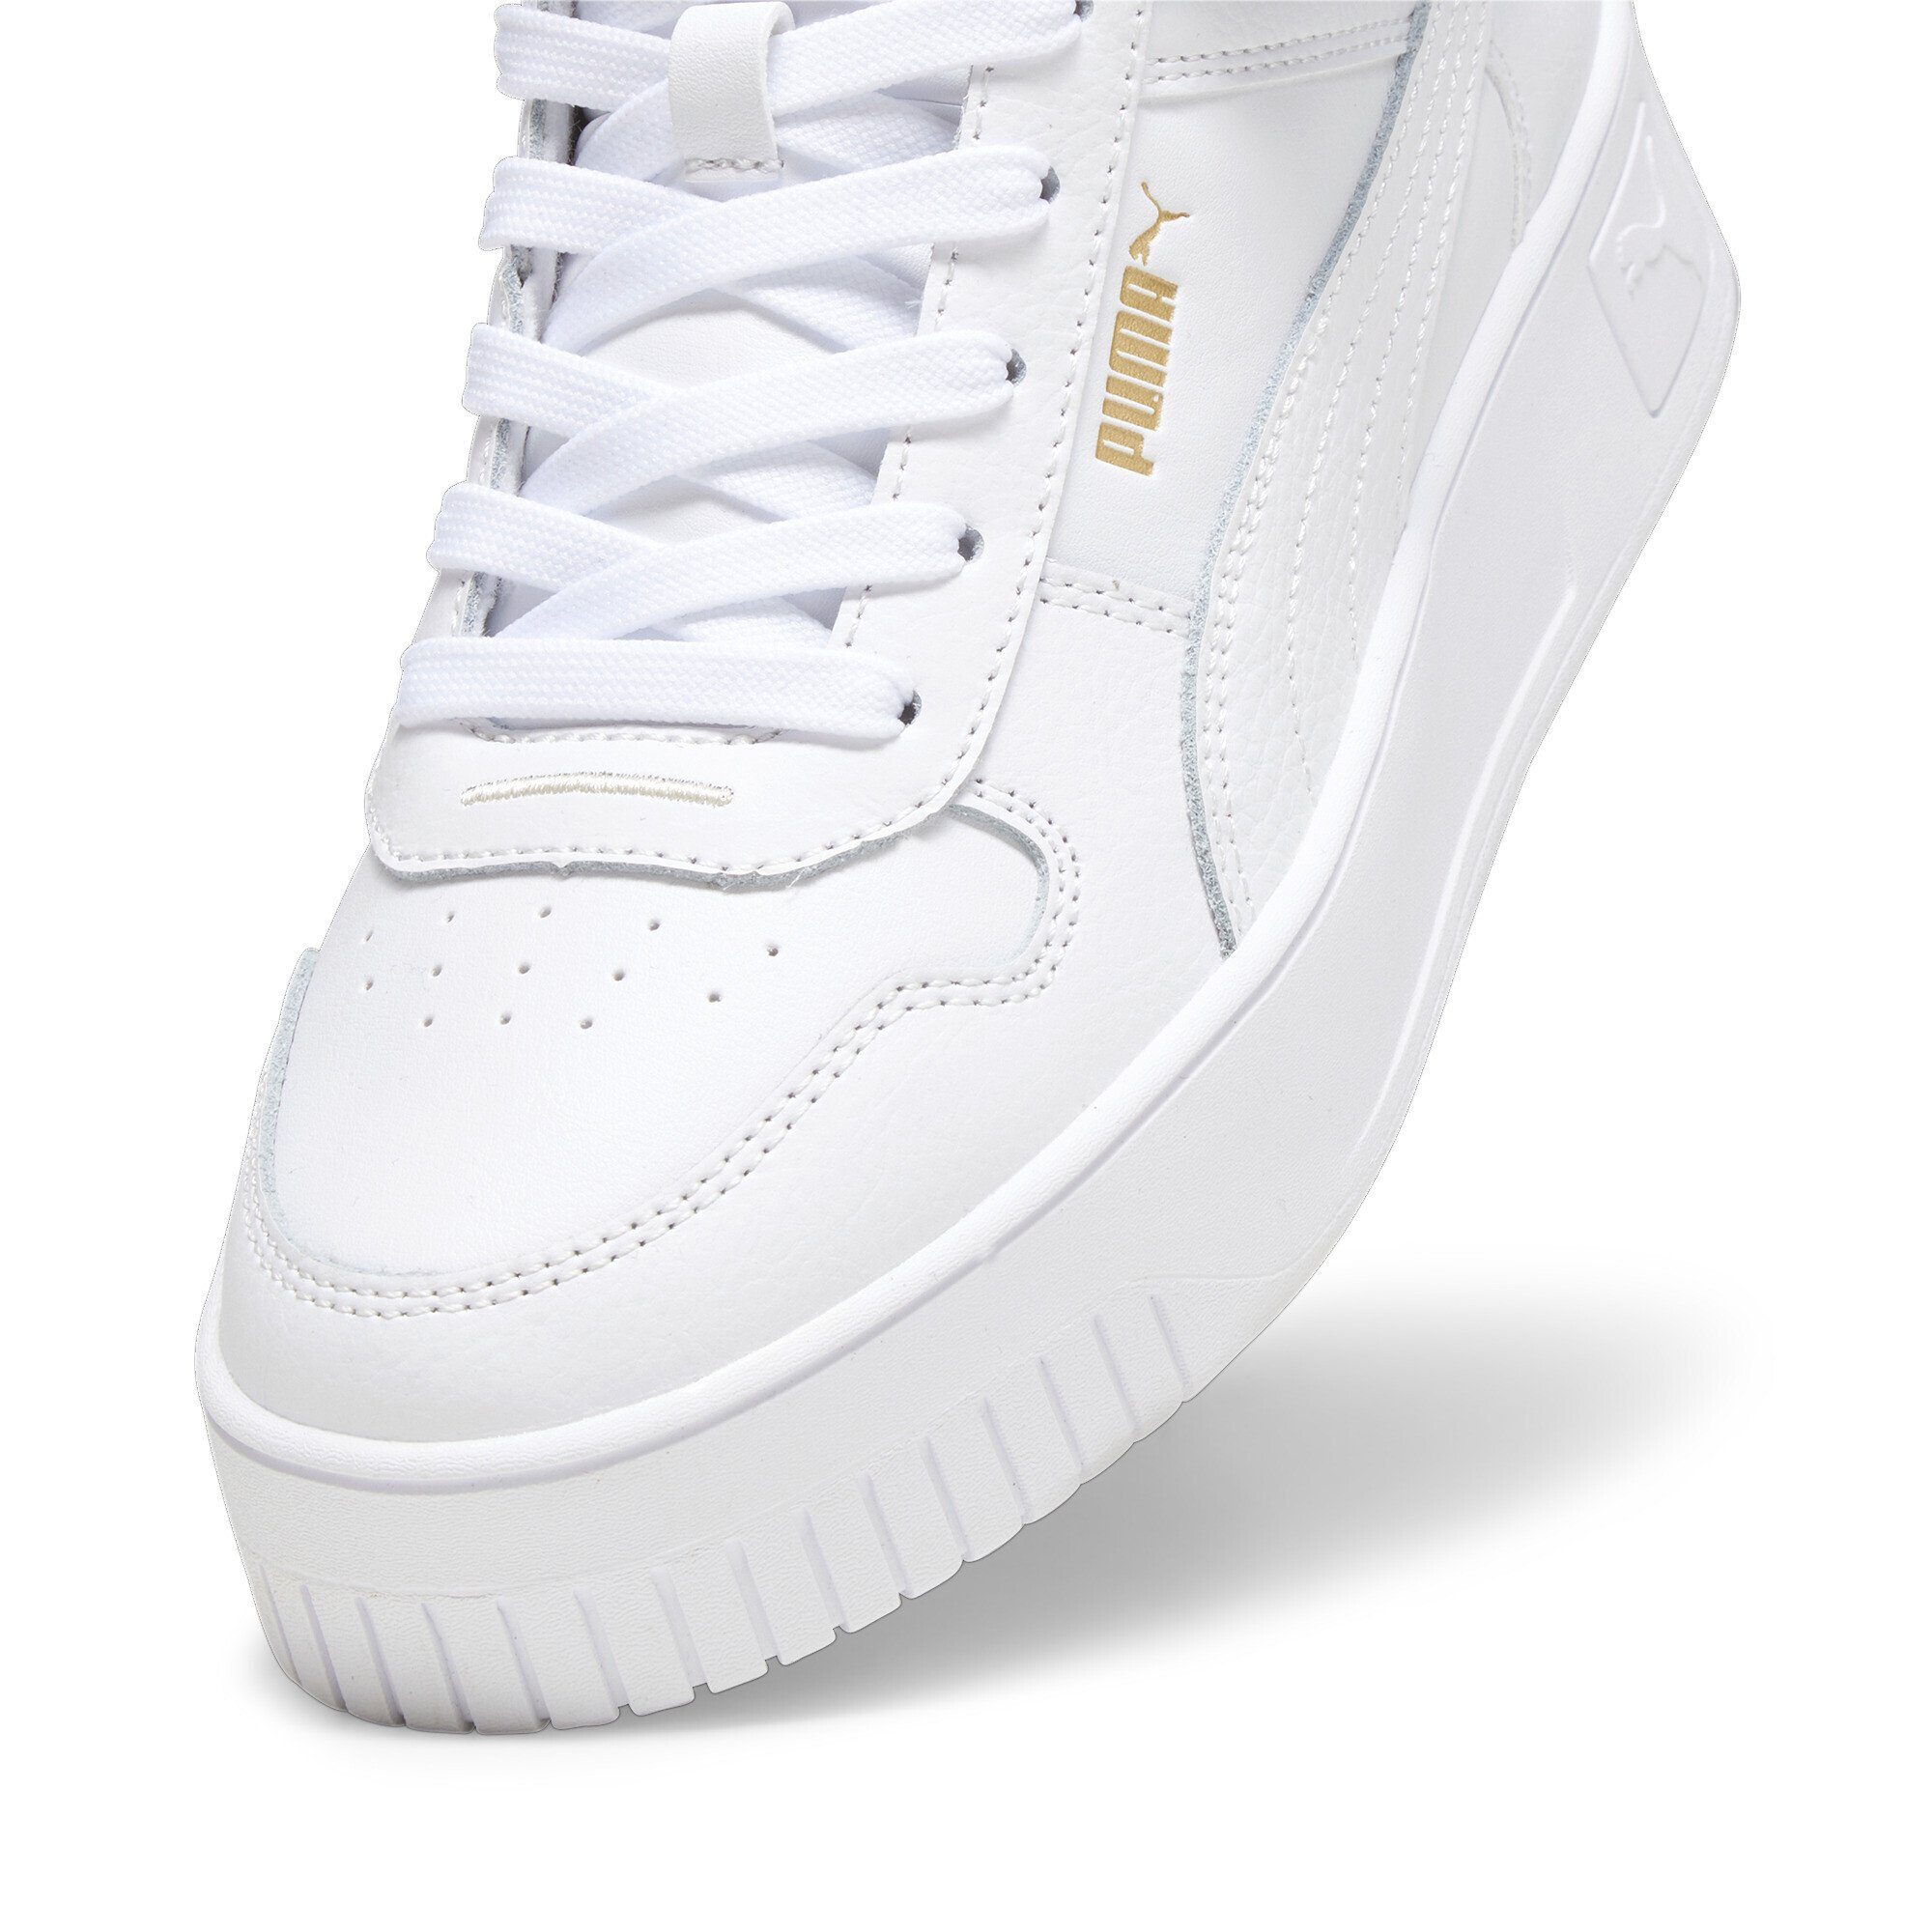 Street Carina Damen PUMA Gold White Sneakers Sneaker Mid